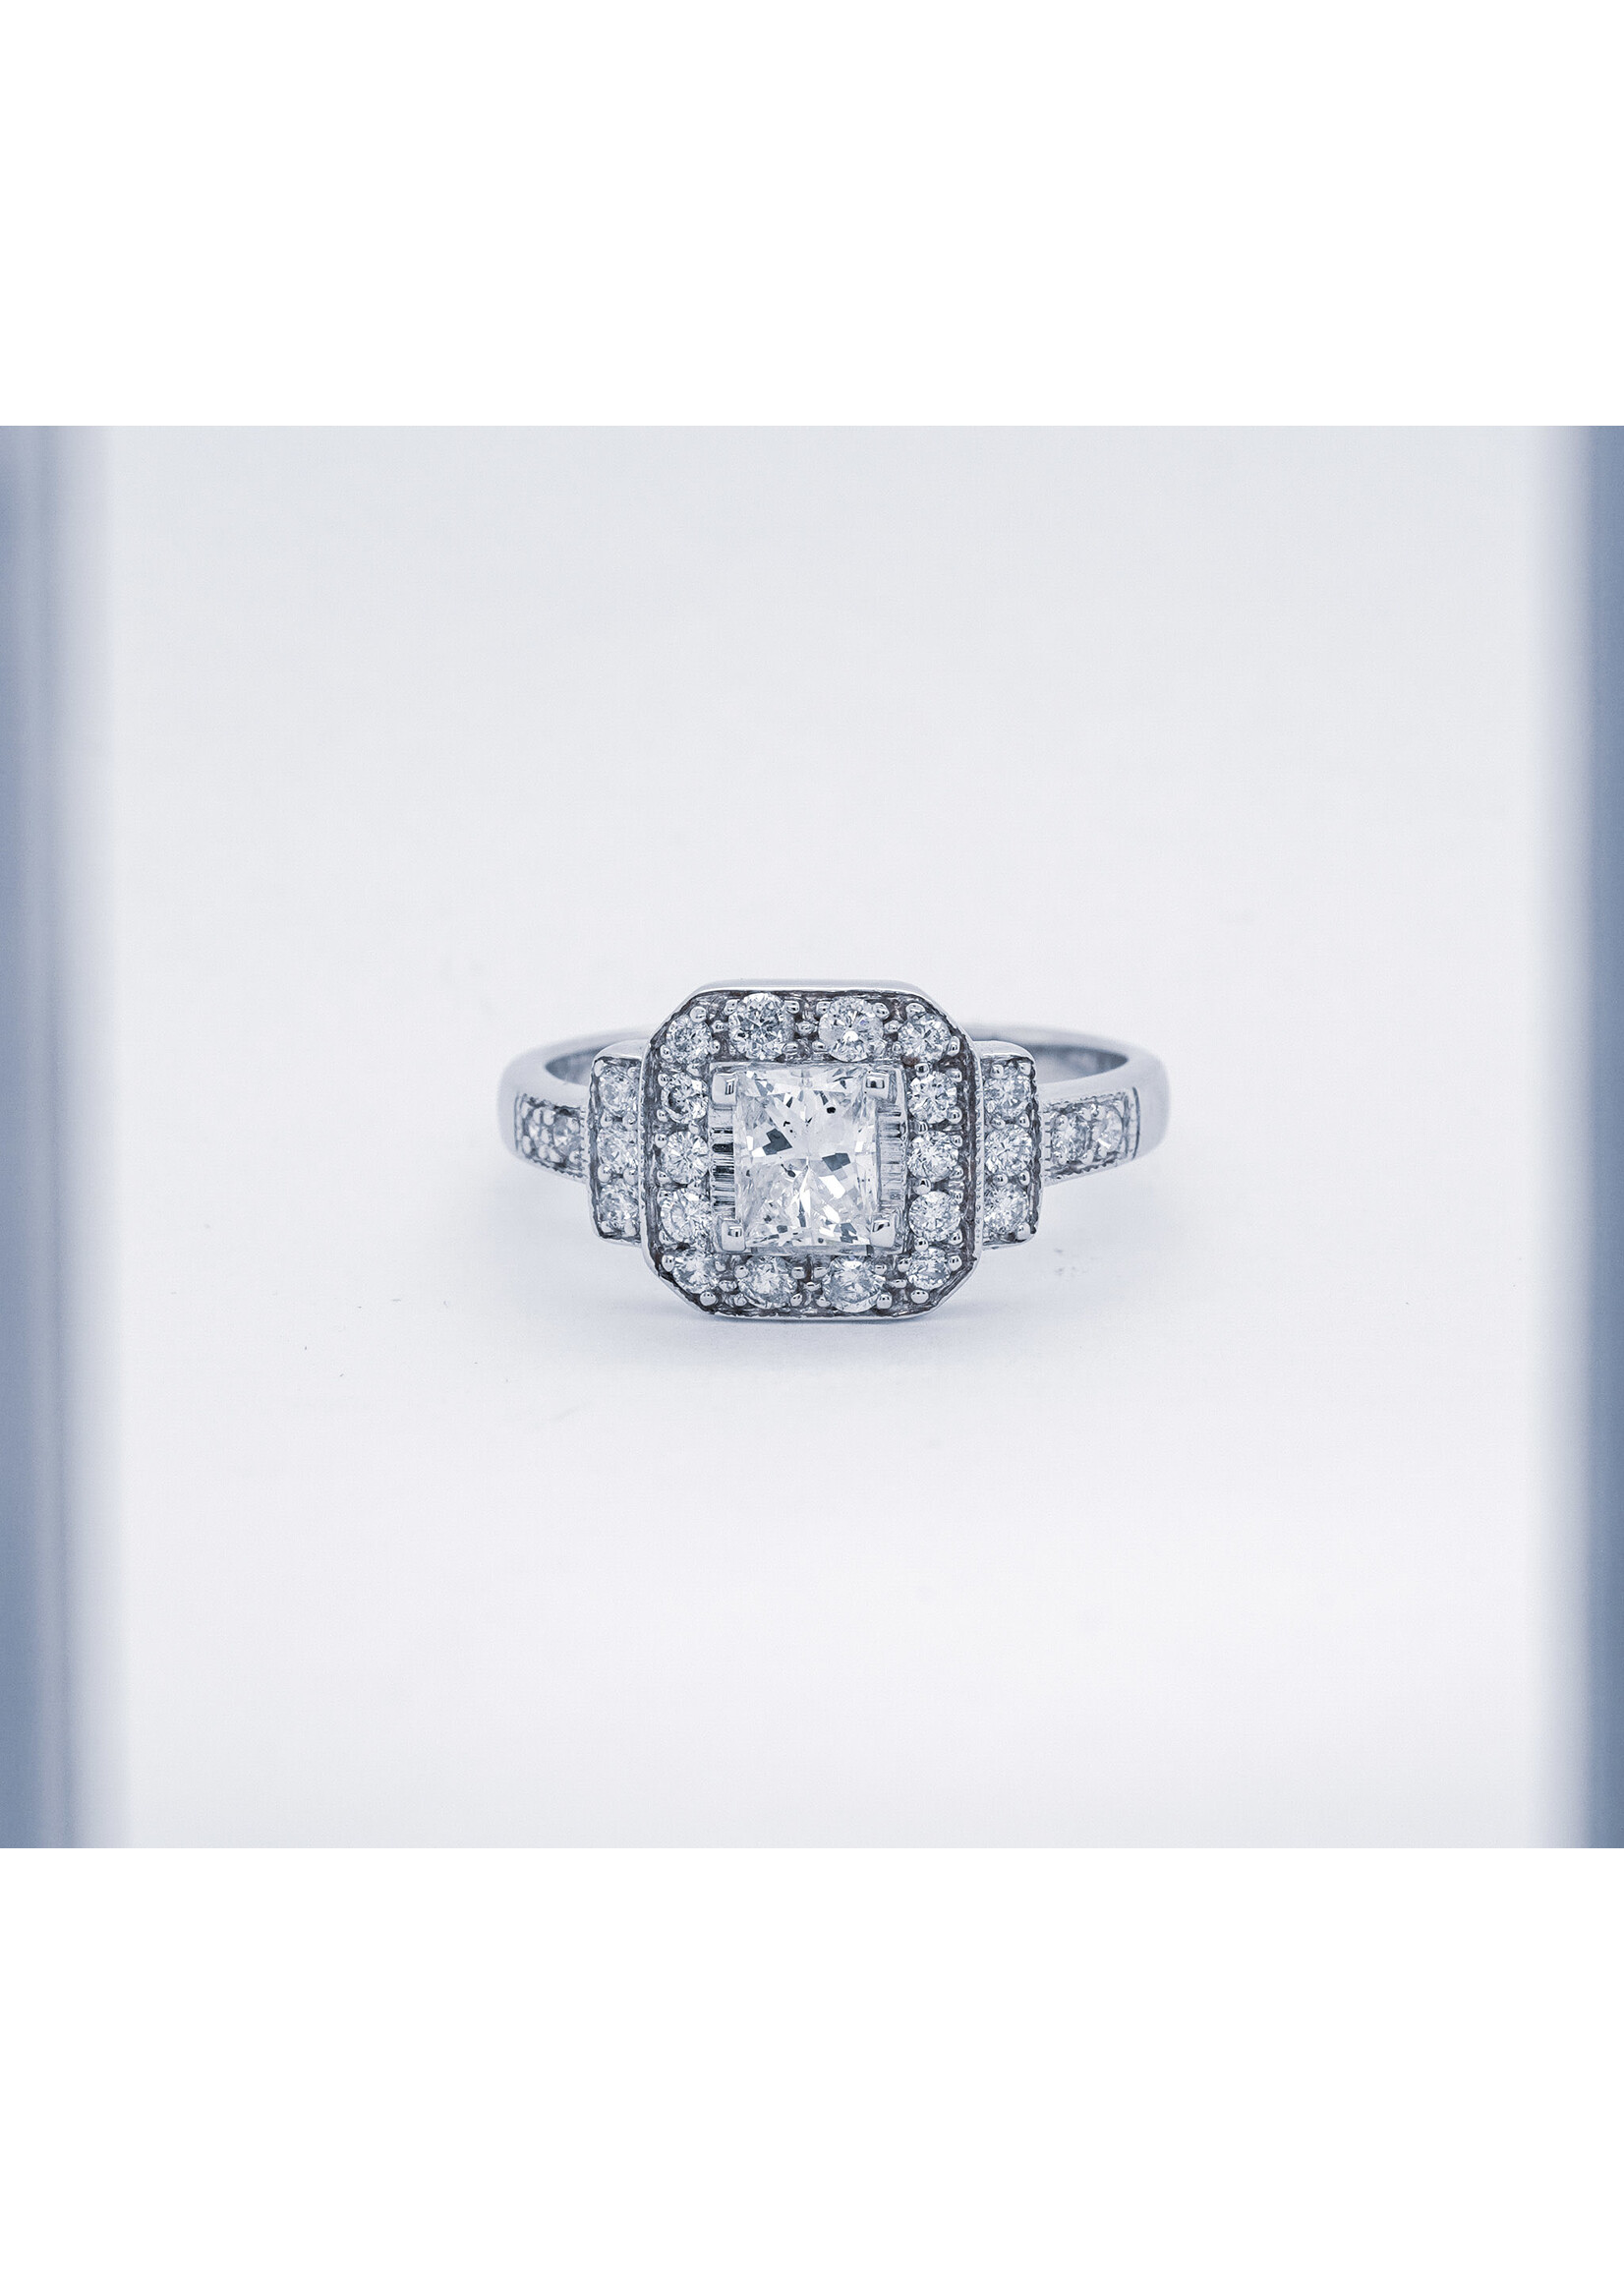 14KW 3.92g 1.50TW (.80ctr) H/SI2 Princess Cut Diamond Halo Engagement Ring (size 8.5)